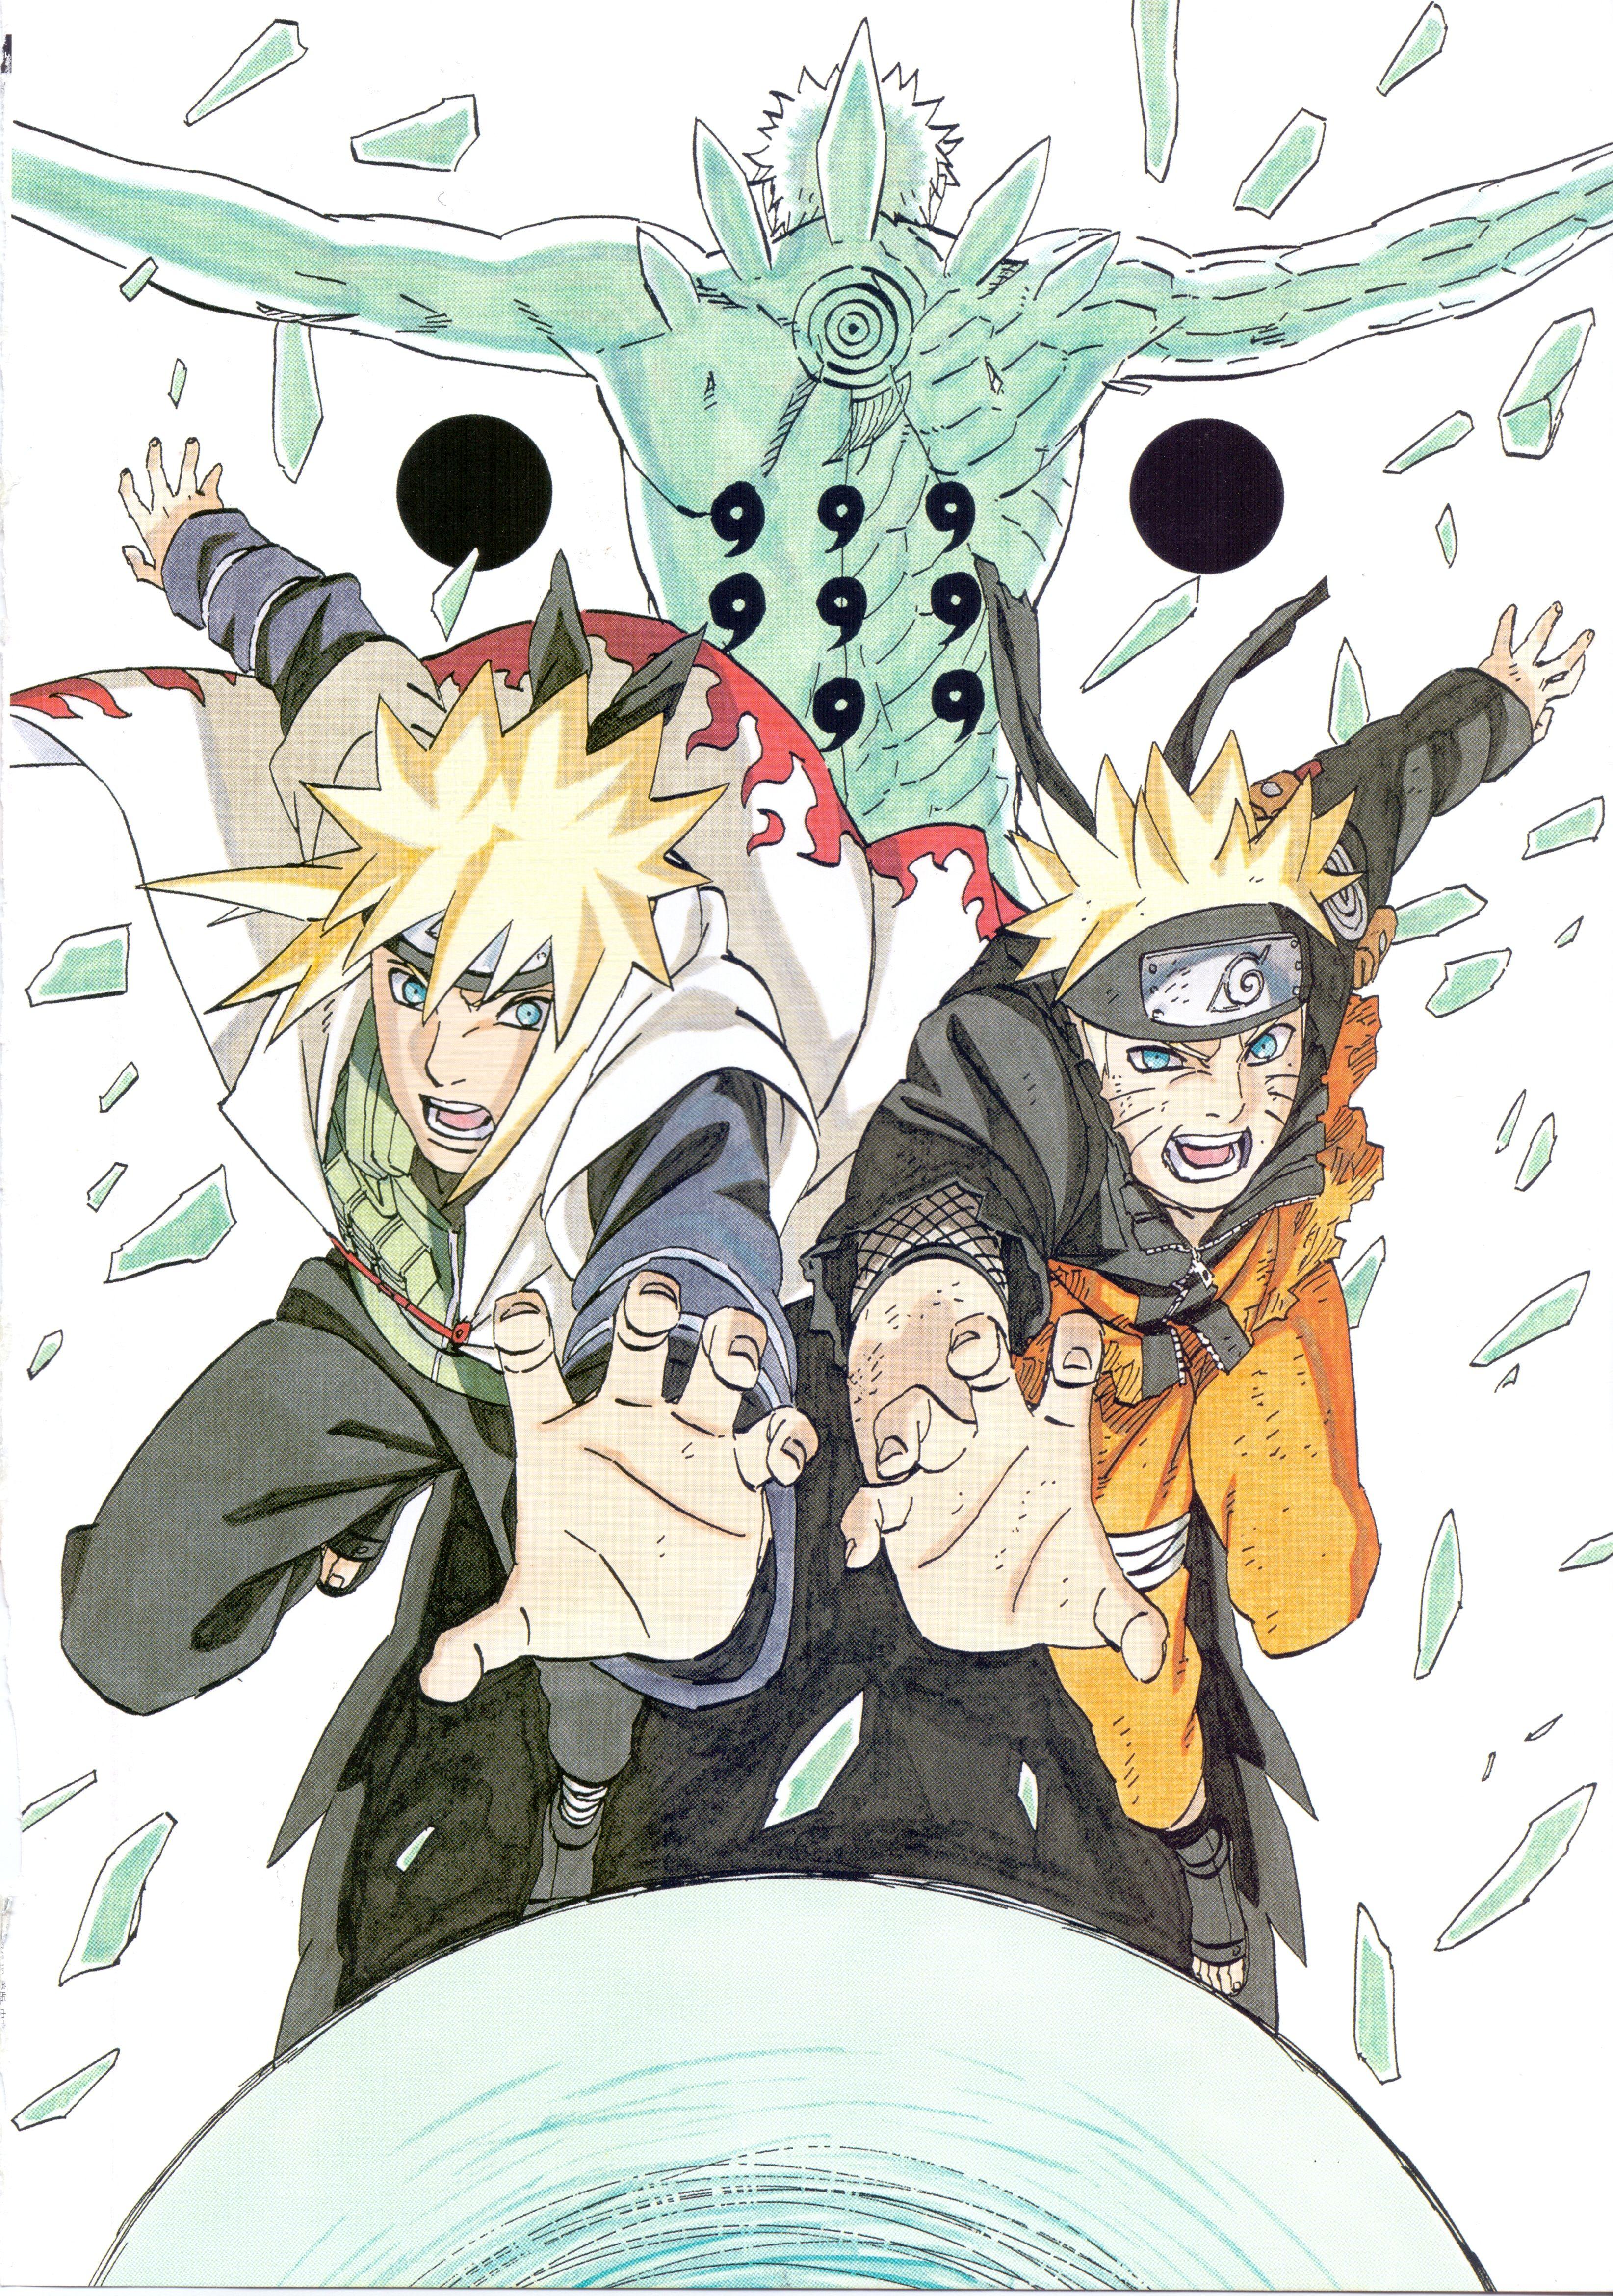 Mobile wallpaper: Anime, Naruto, Warrior, Ninja, Minimalist, Naruto  Uzumaki, Hokage (Naruto), 1185934 download the picture for free.